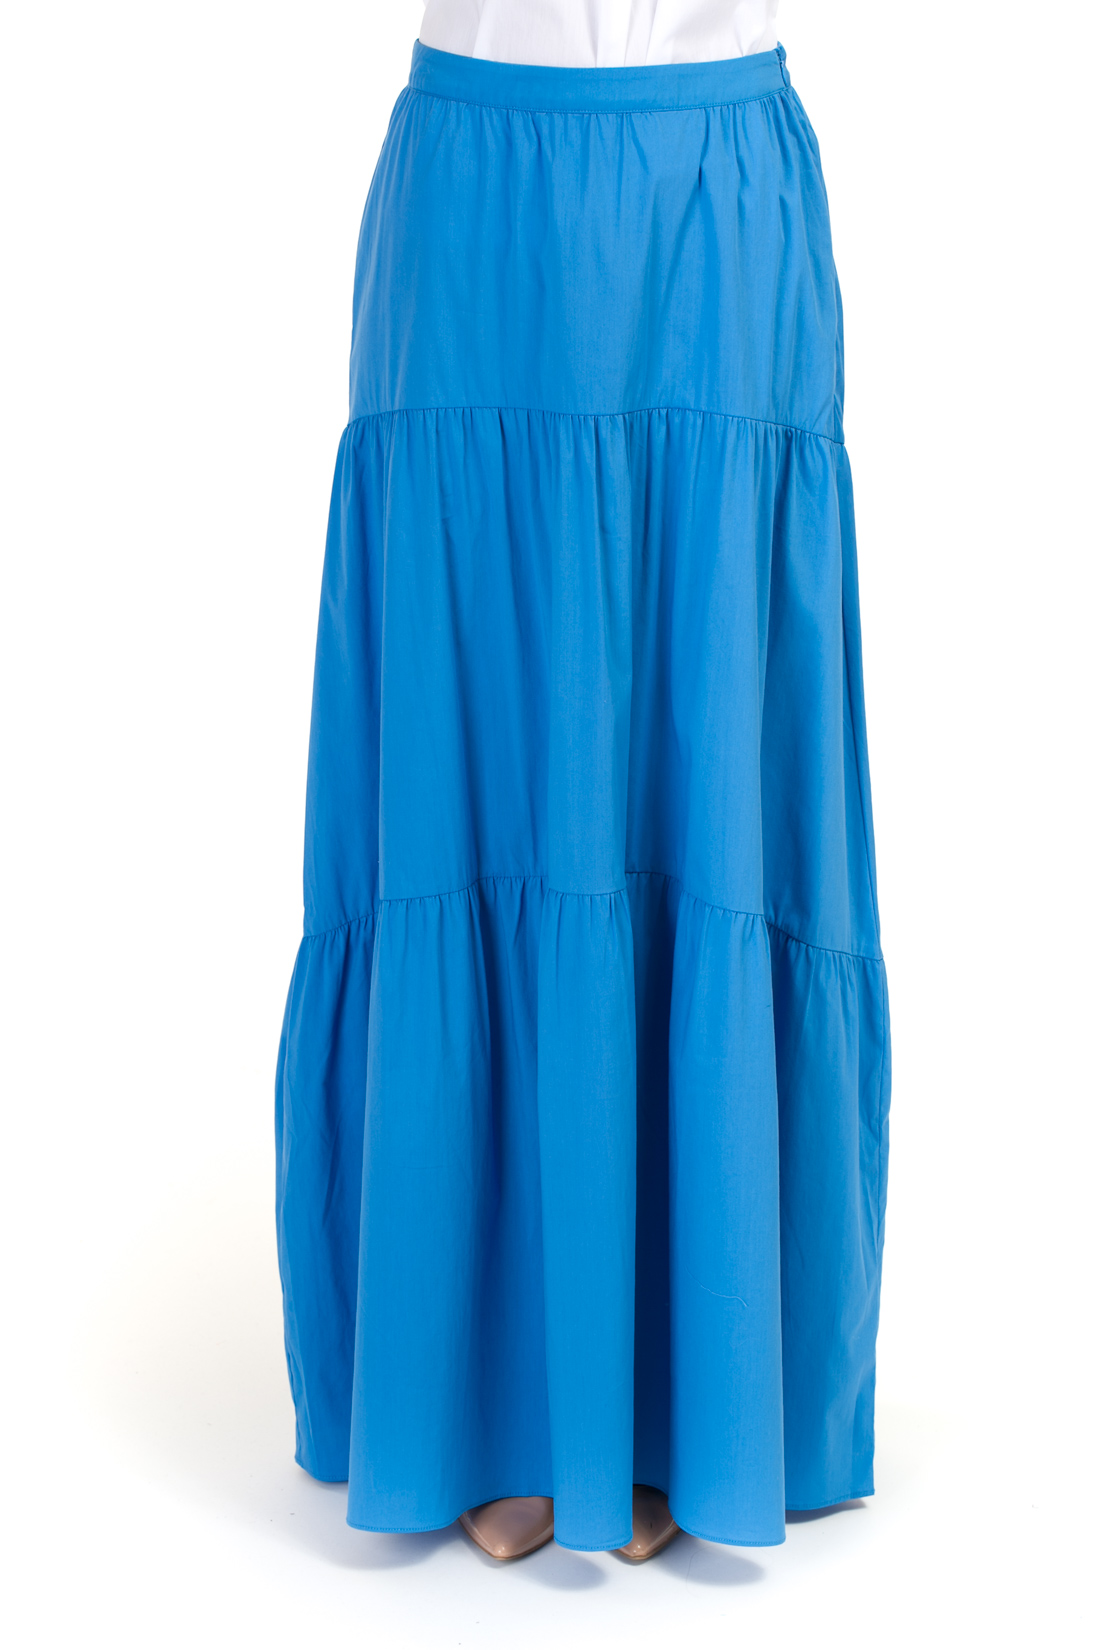 Юбка в цыганском стиле (арт. baon B477026), размер XXL, цвет синий Юбка в цыганском стиле (арт. baon B477026) - фото 5